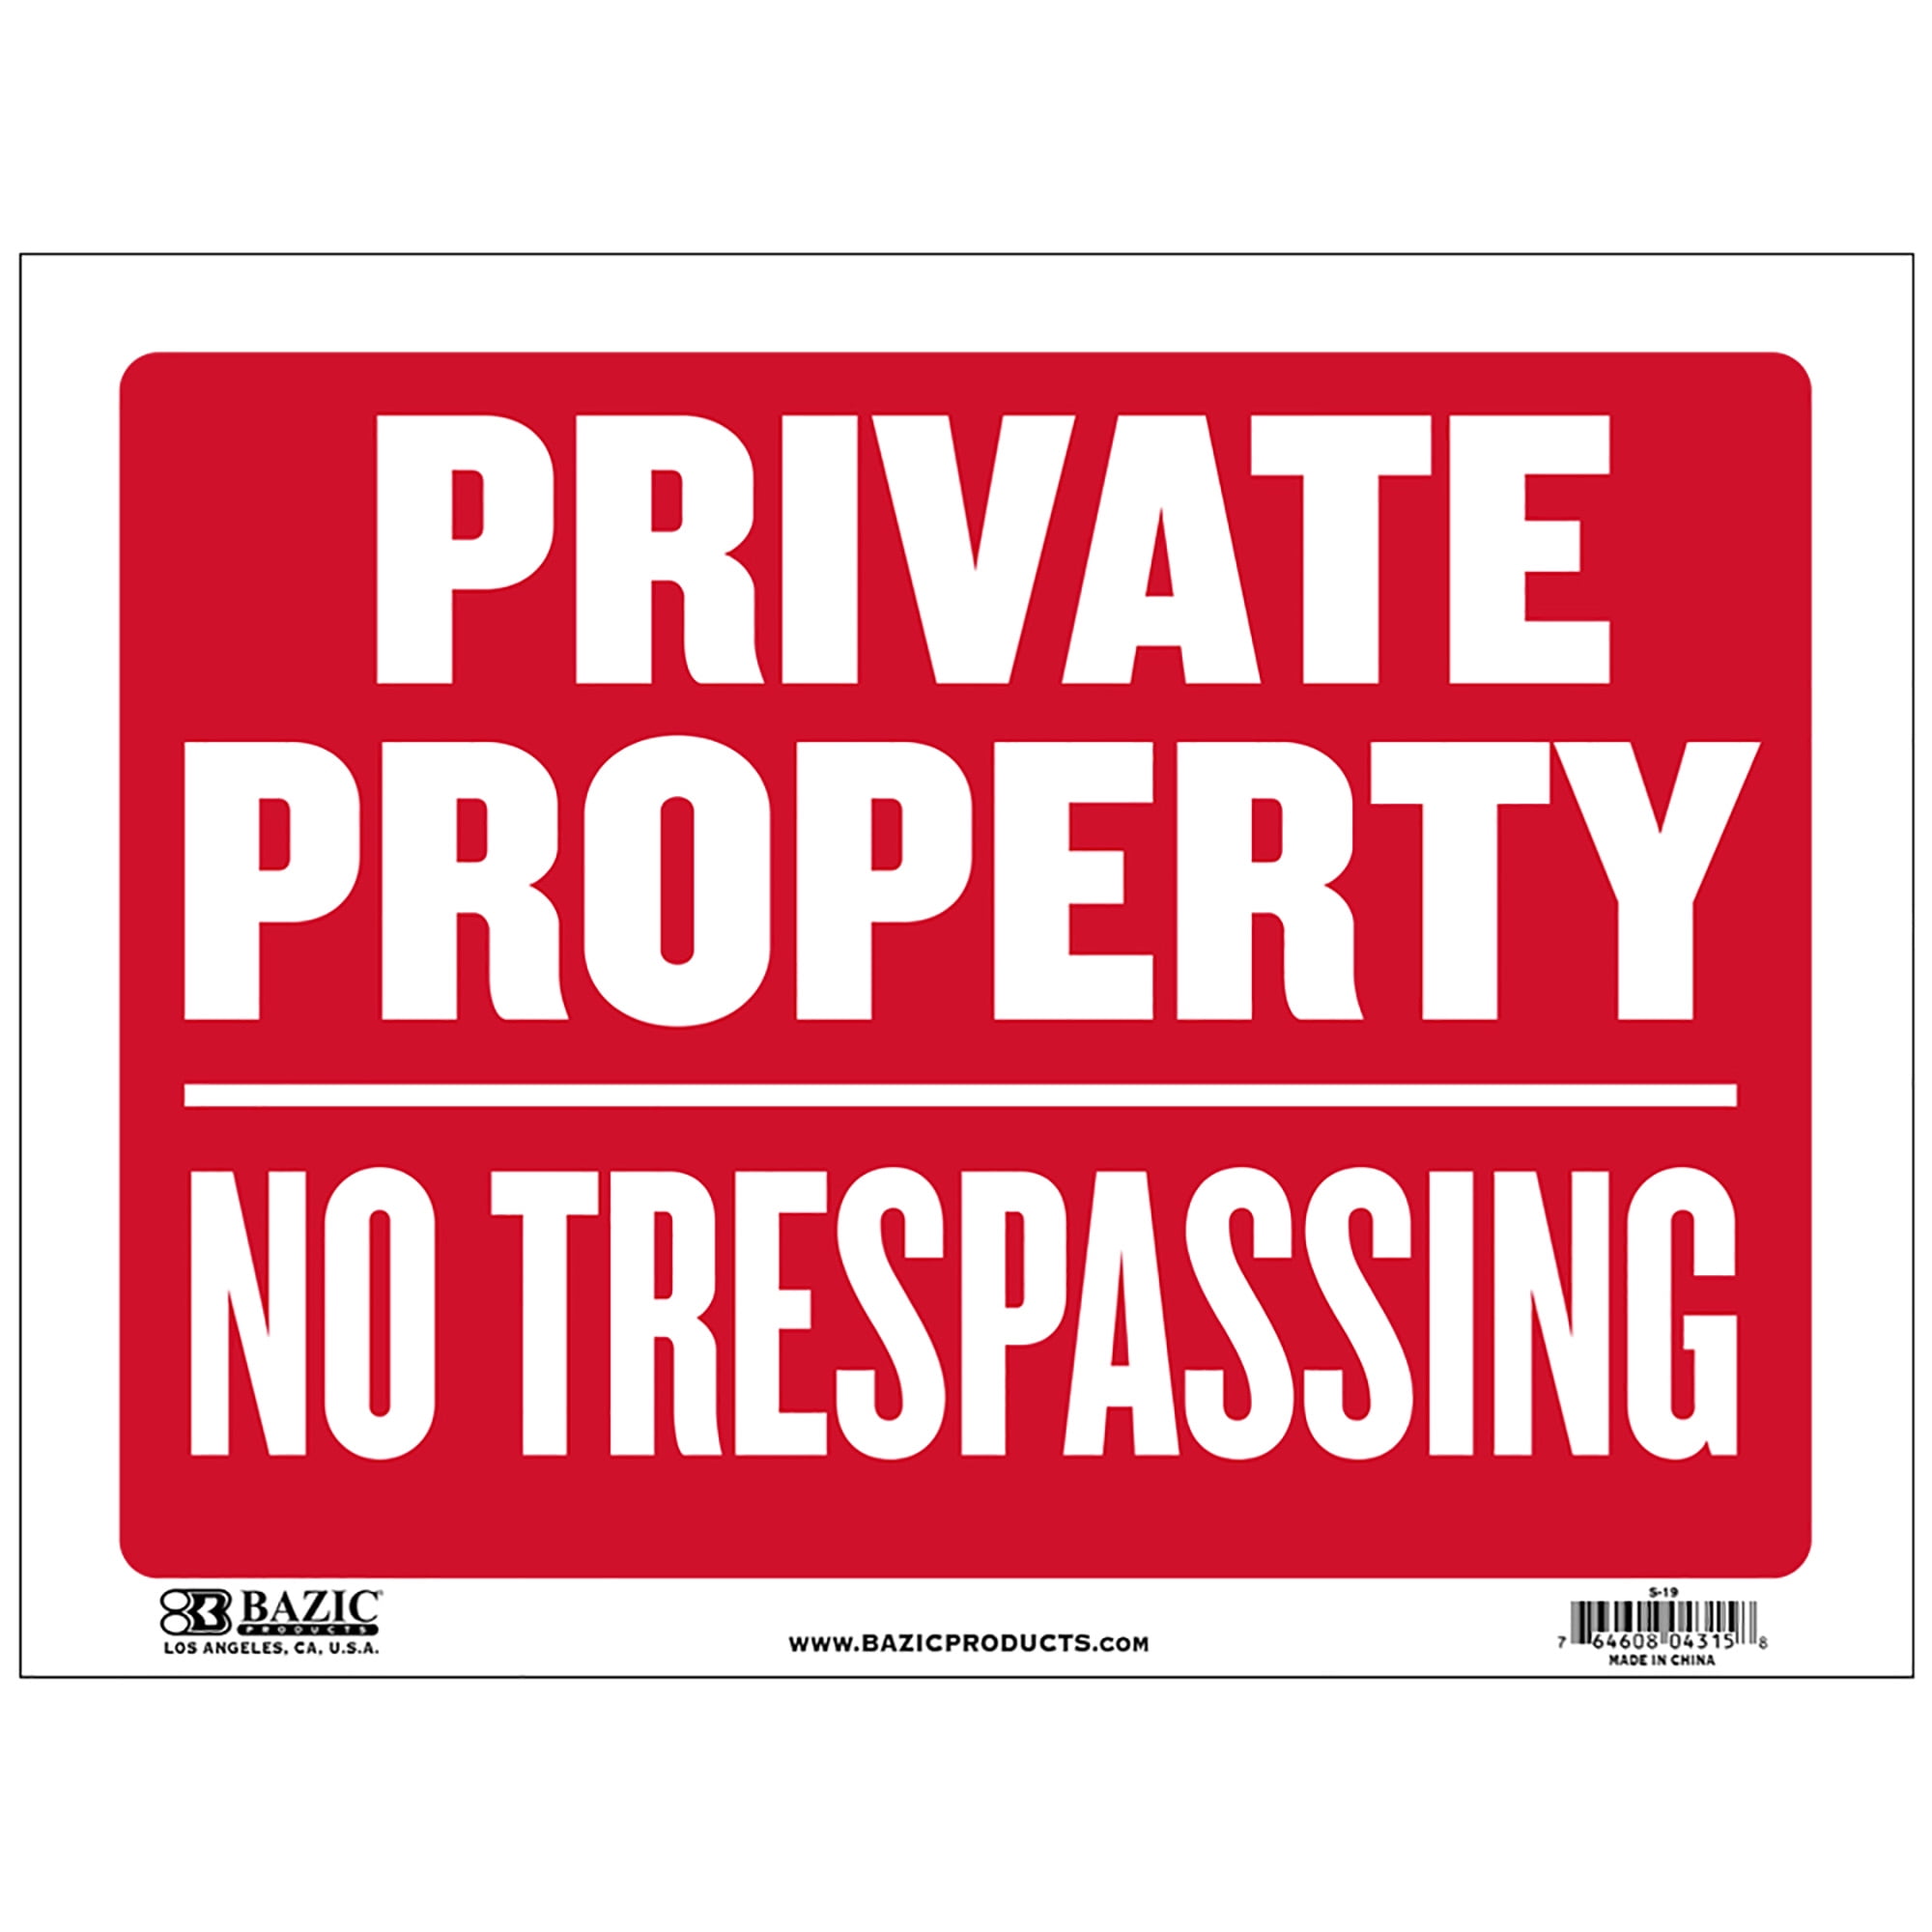 Danger US Government Property No Trespassing Design 8x12 In Aluminum Sign 